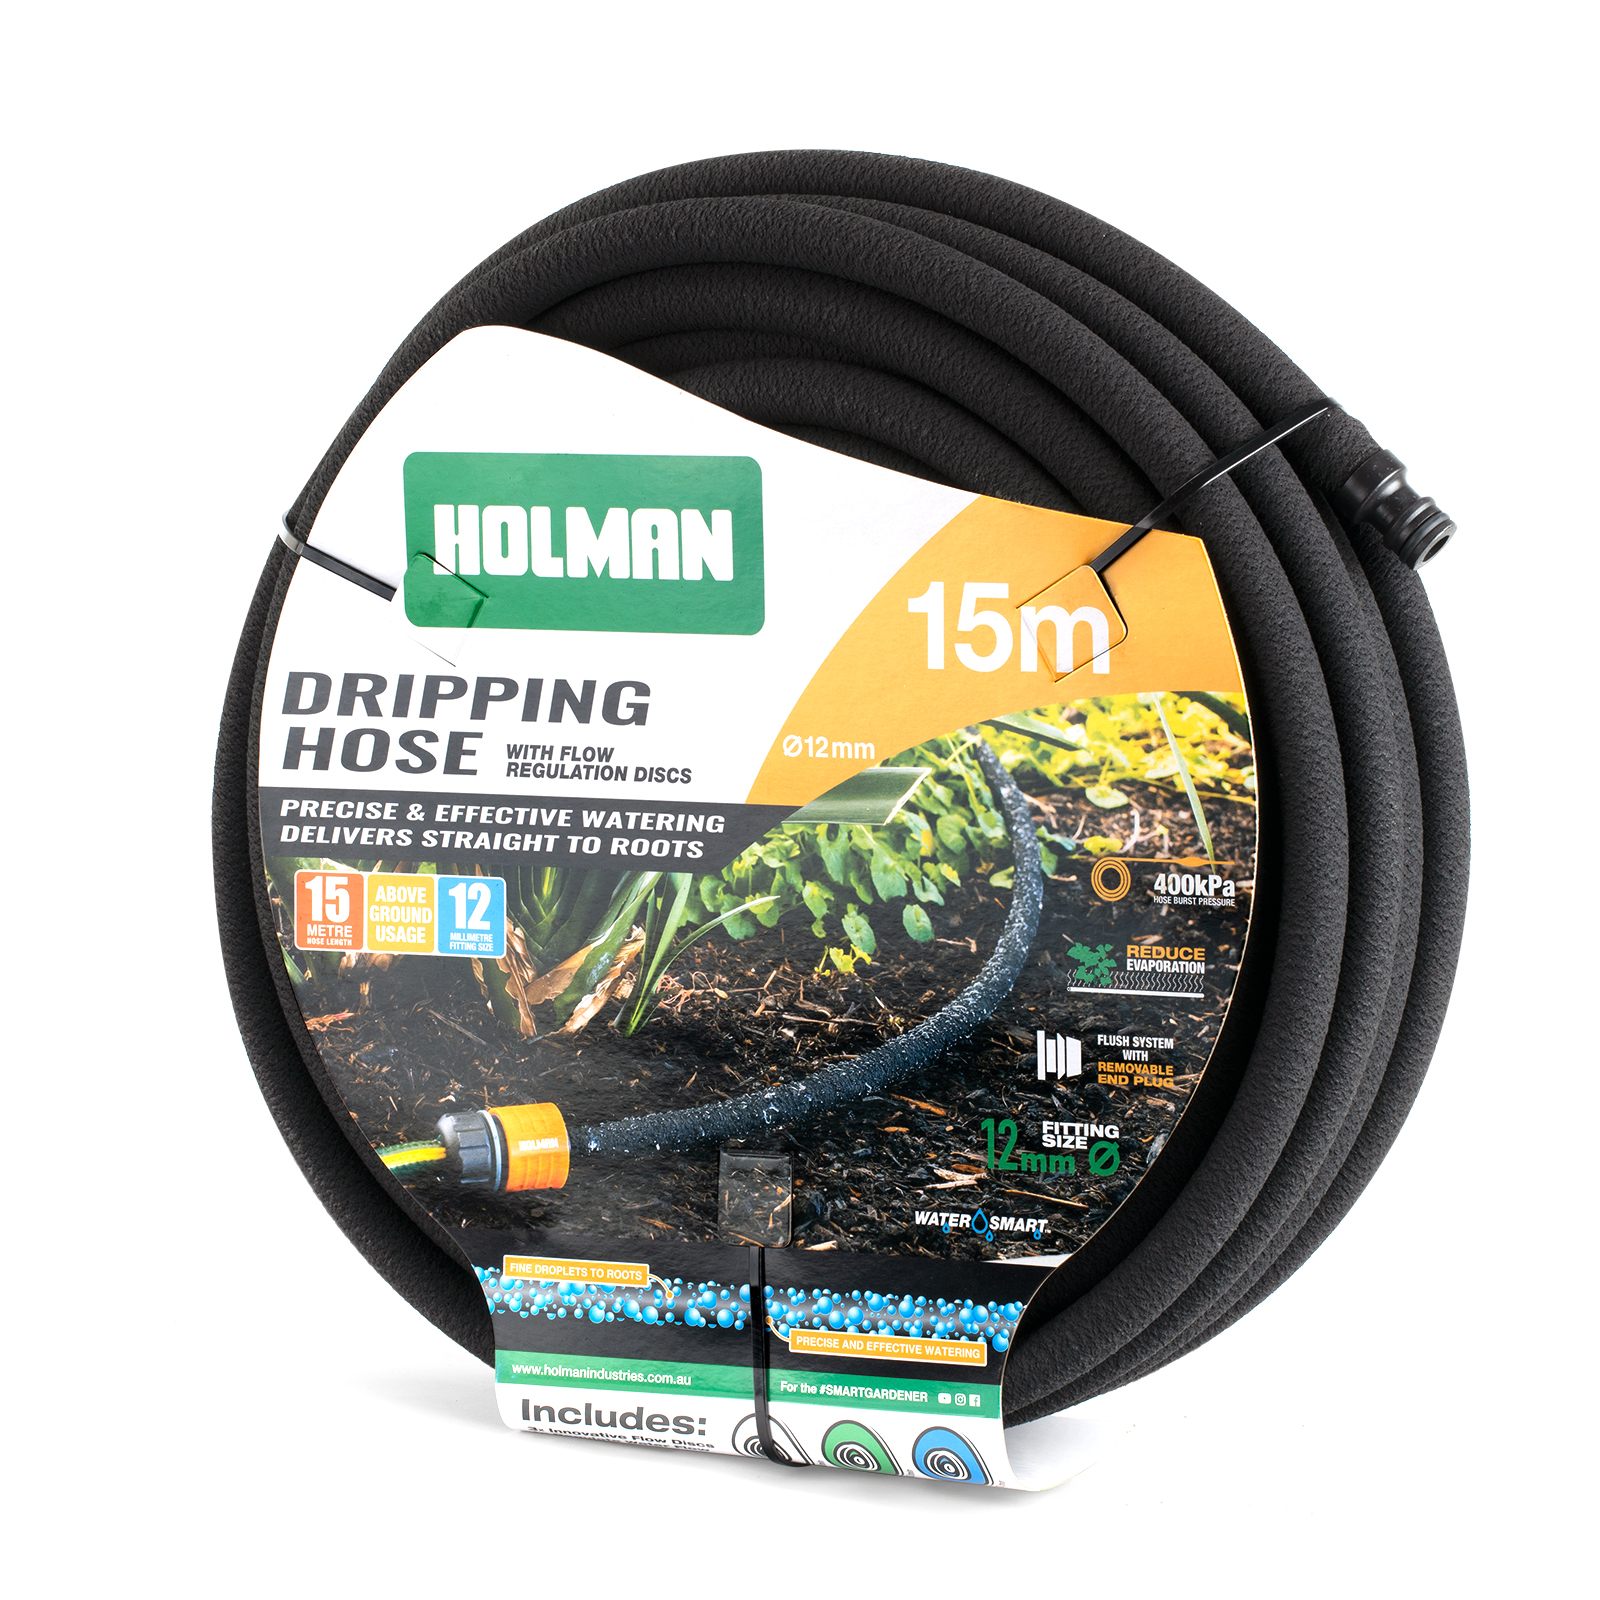 Holman 15m Dripping Hose